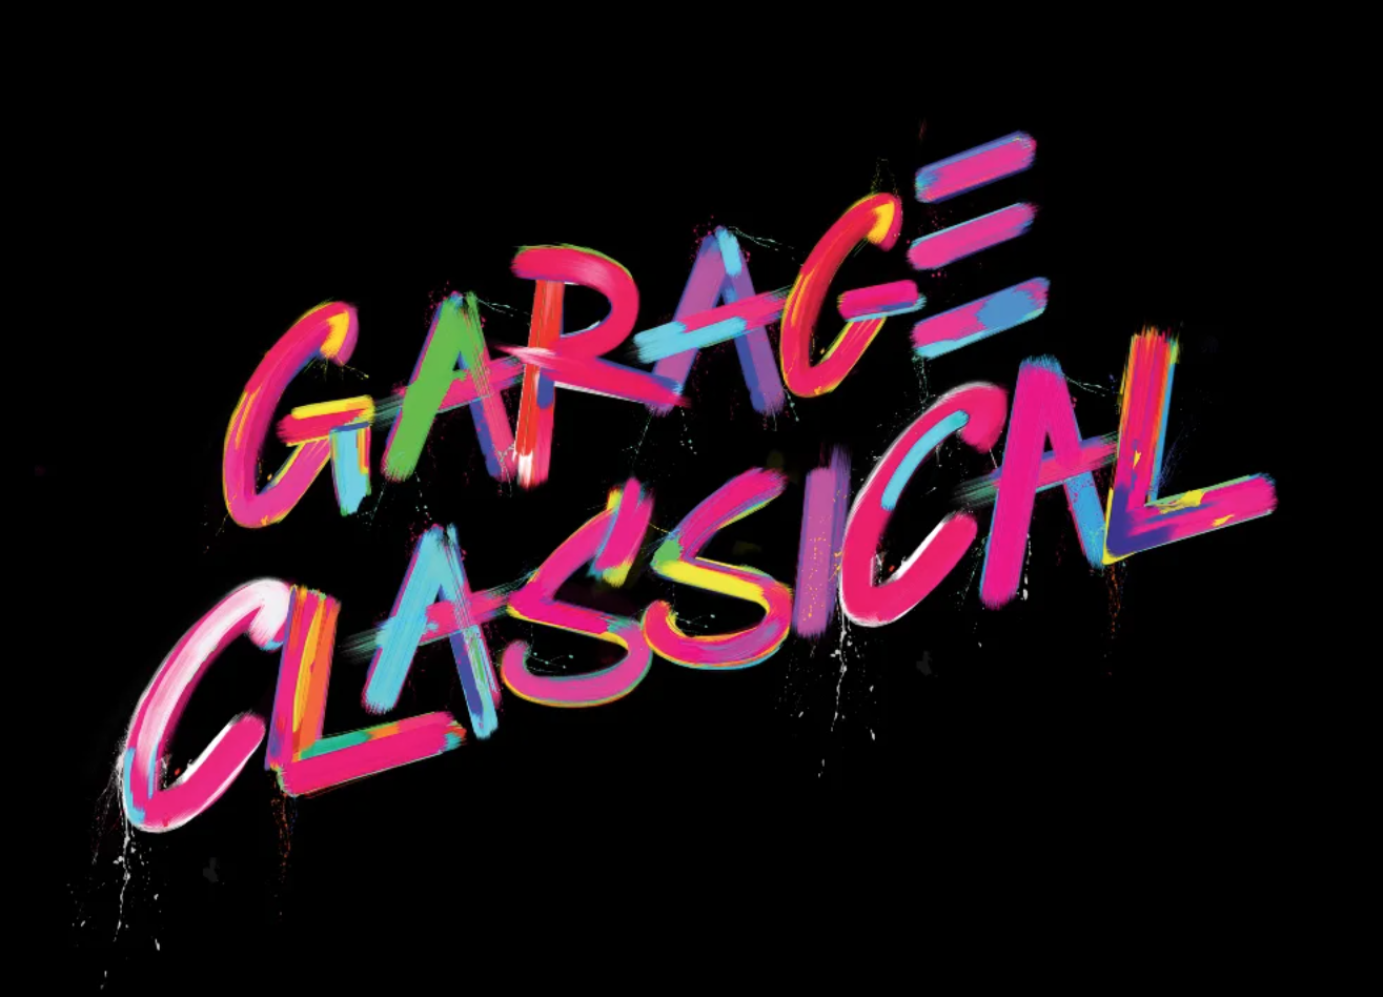 Garage: Classical